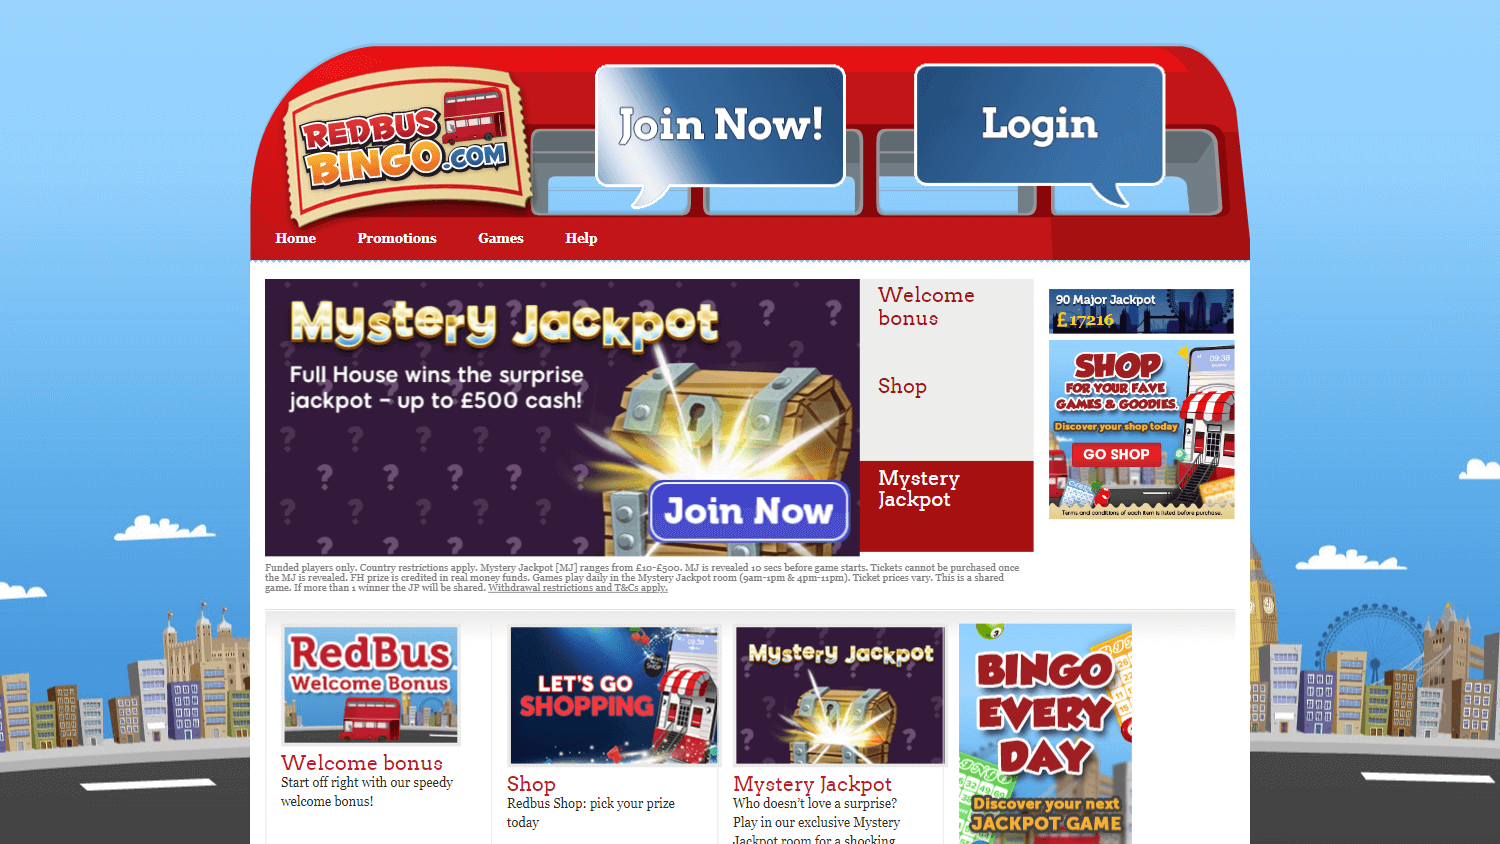 redbus_bingo_casino_homepage_desktop